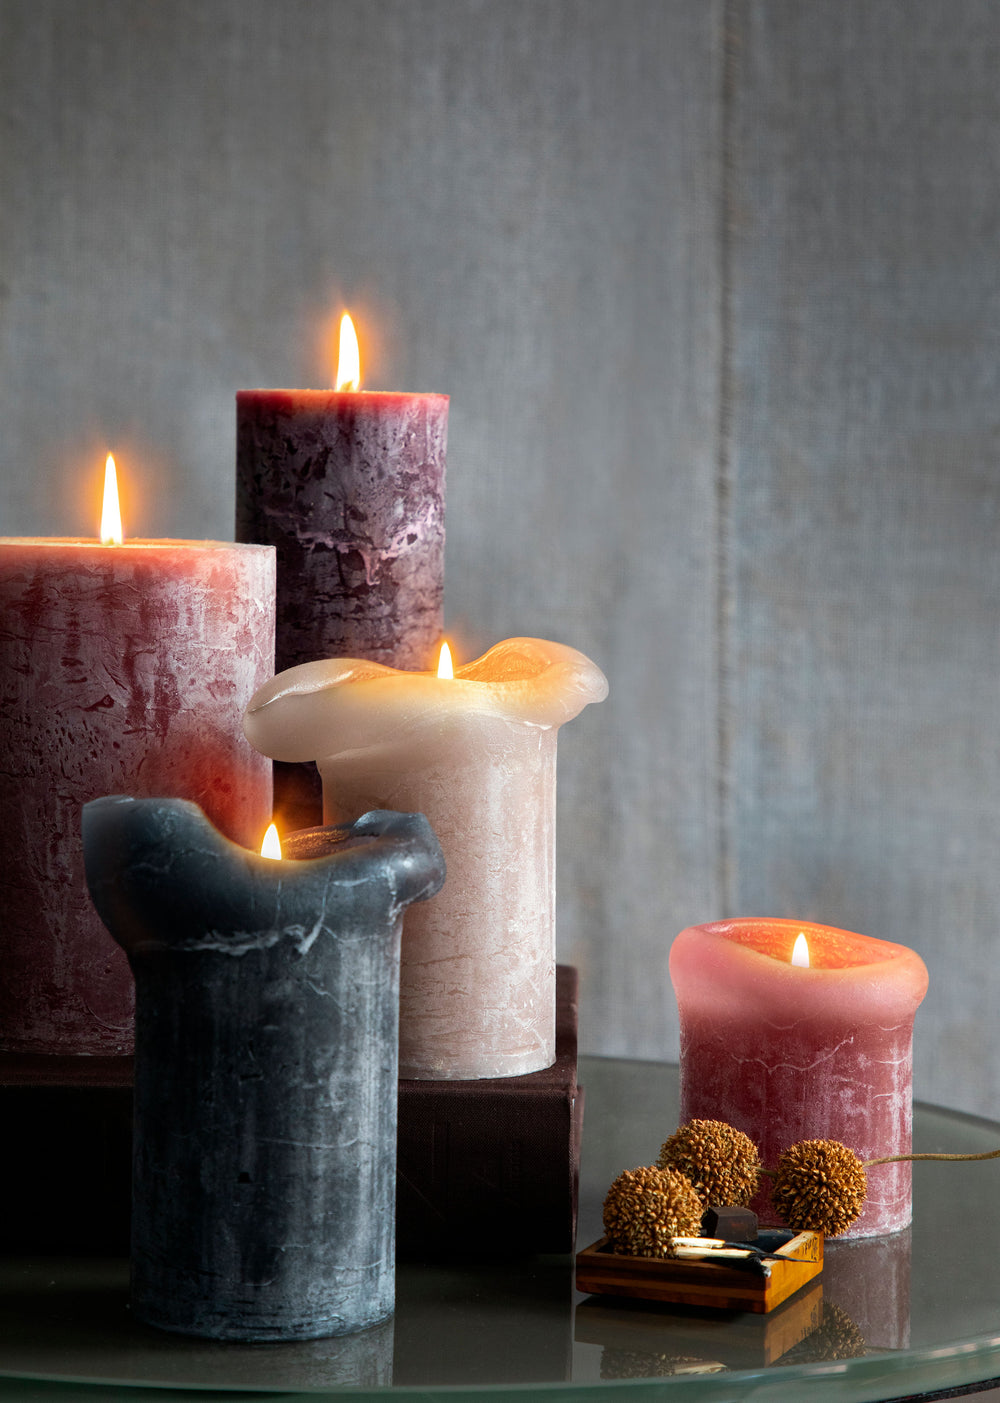 Rustic candle bloklys, diameter 10 cm - DUSTY ROSE • Cozy living